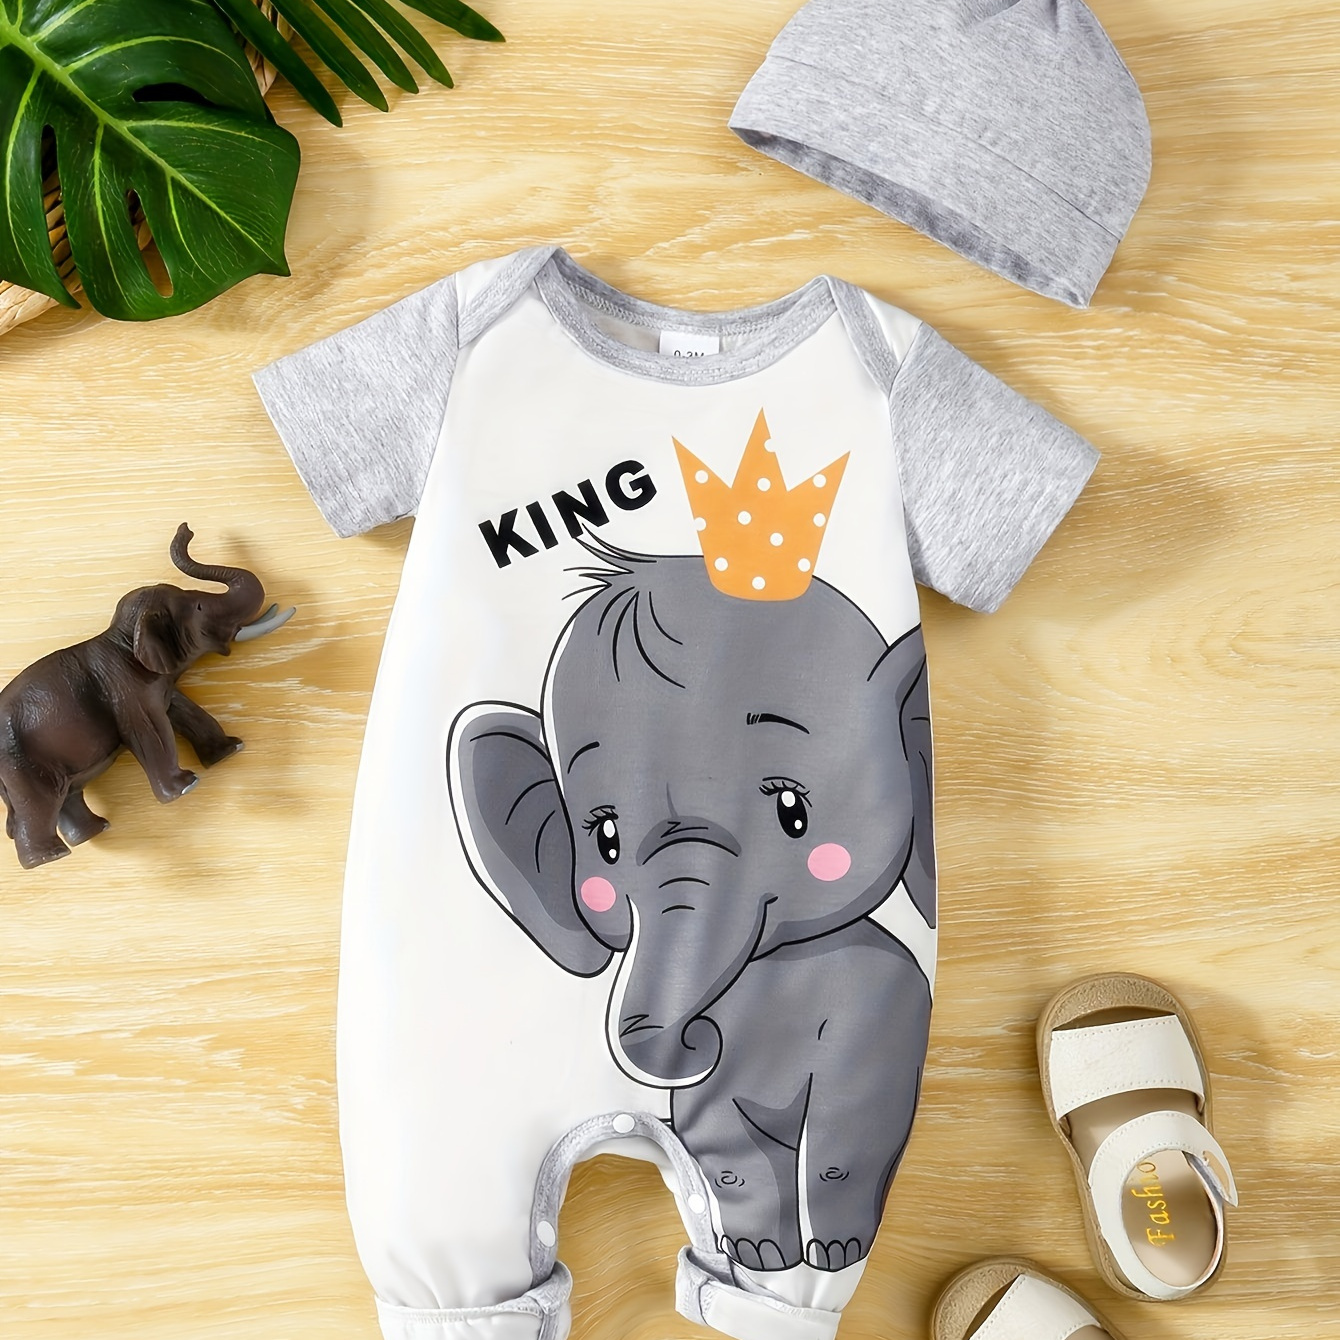 

Baby's Cartoon Elephant King Print Bodysuit & Hat, Casual Short Sleeve Romper, Toddler & Infant Boy's Clothing